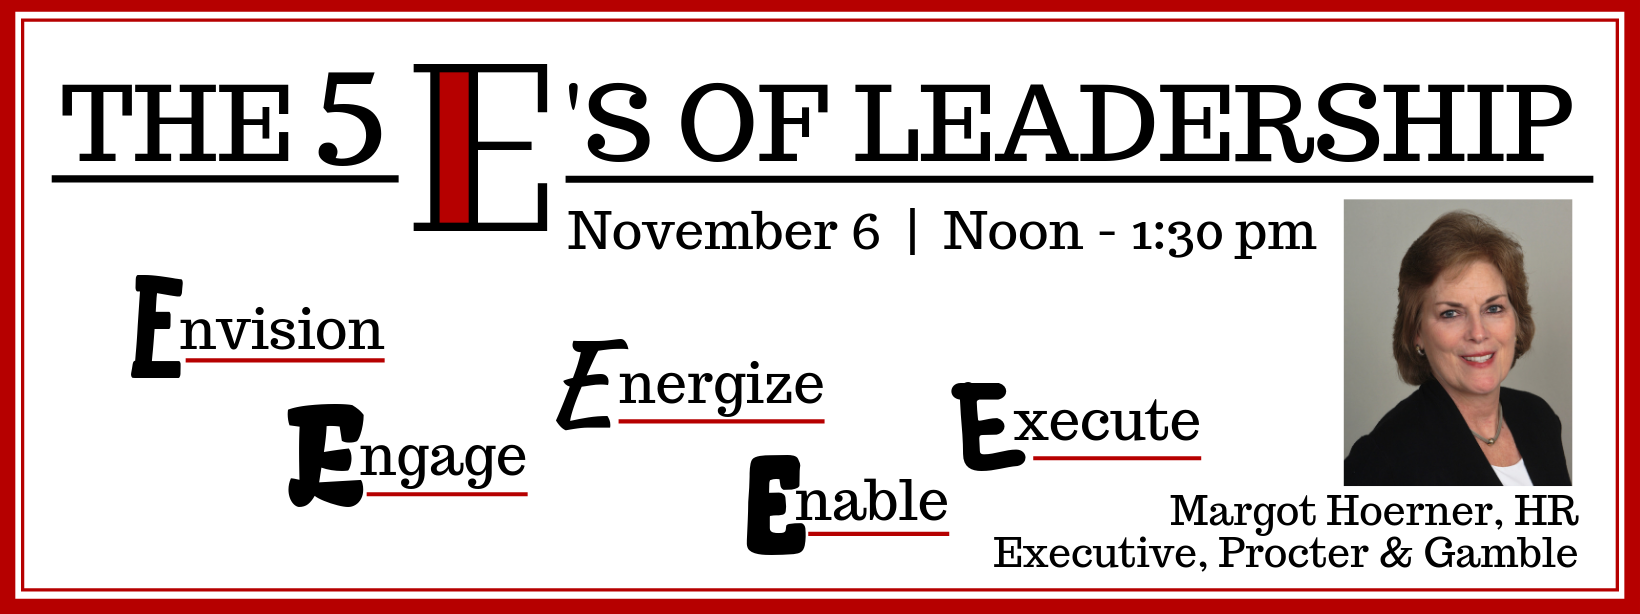 The 5 E’s of Leadership